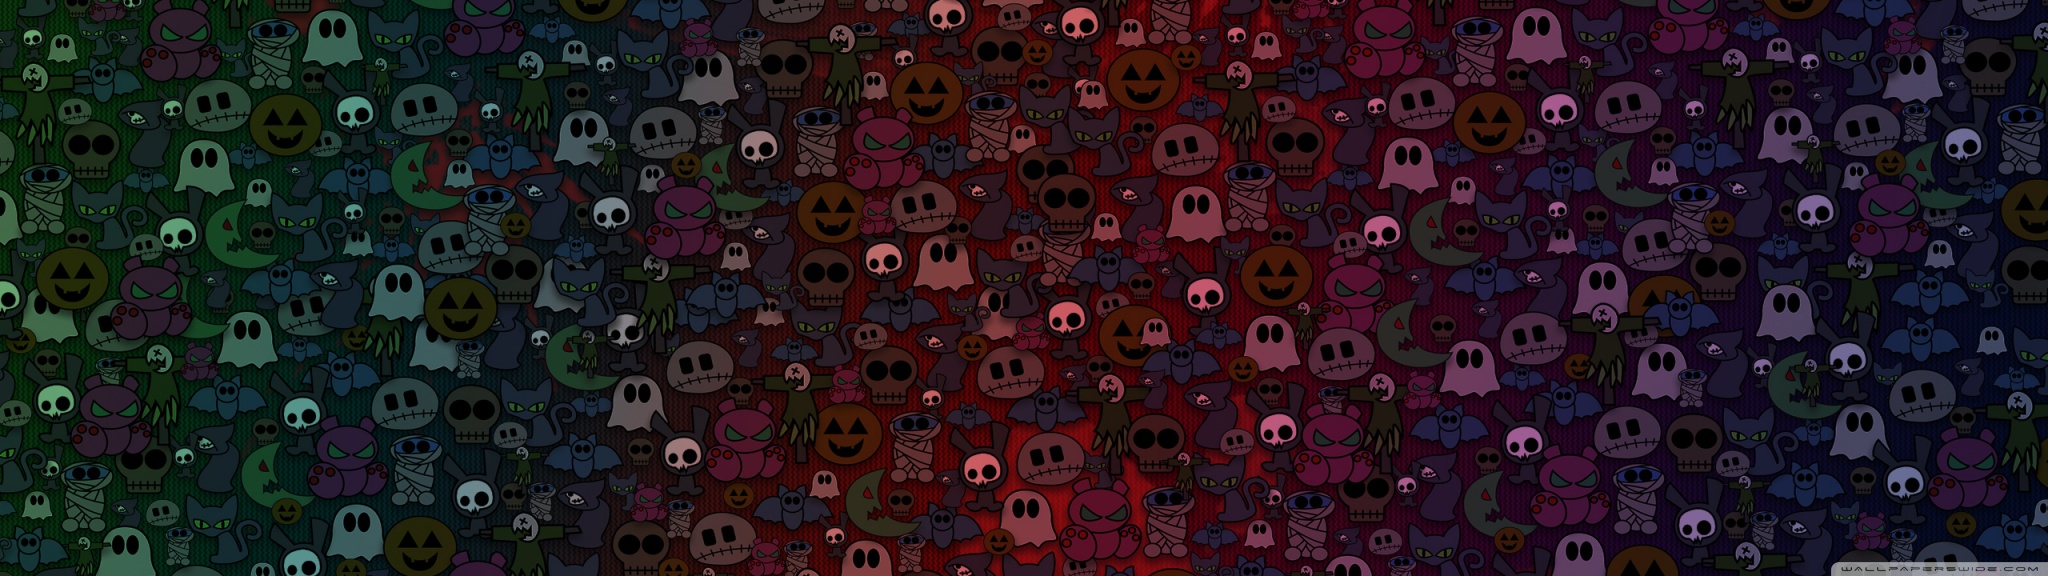 Halloween Monsters Ultra HD Desktop Background Wallpaper for 4K UHD TV ...